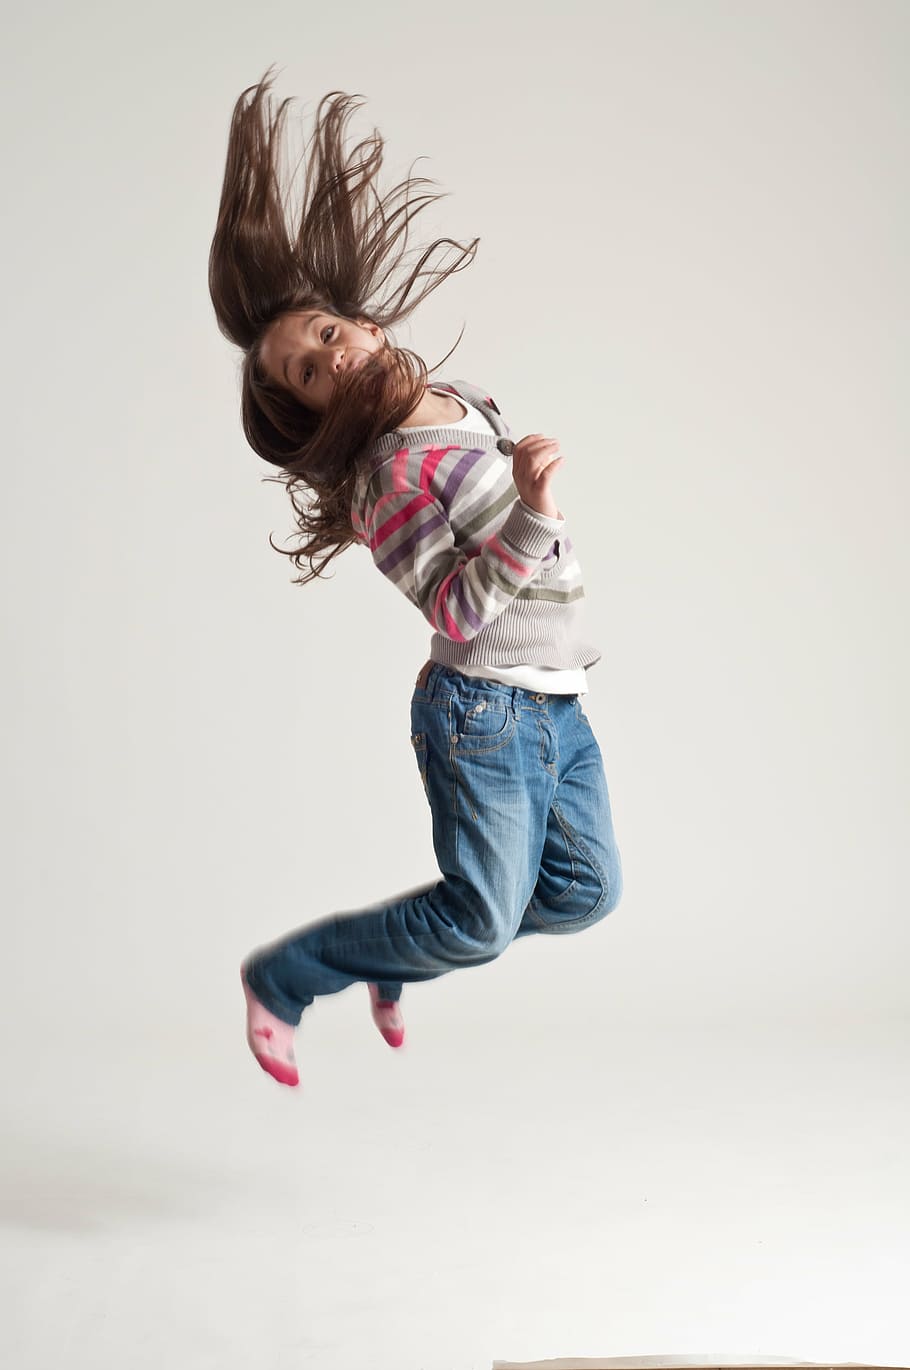 jumping, girl, sweater, blue, denim jeans, jump, child, fun, active, leisure